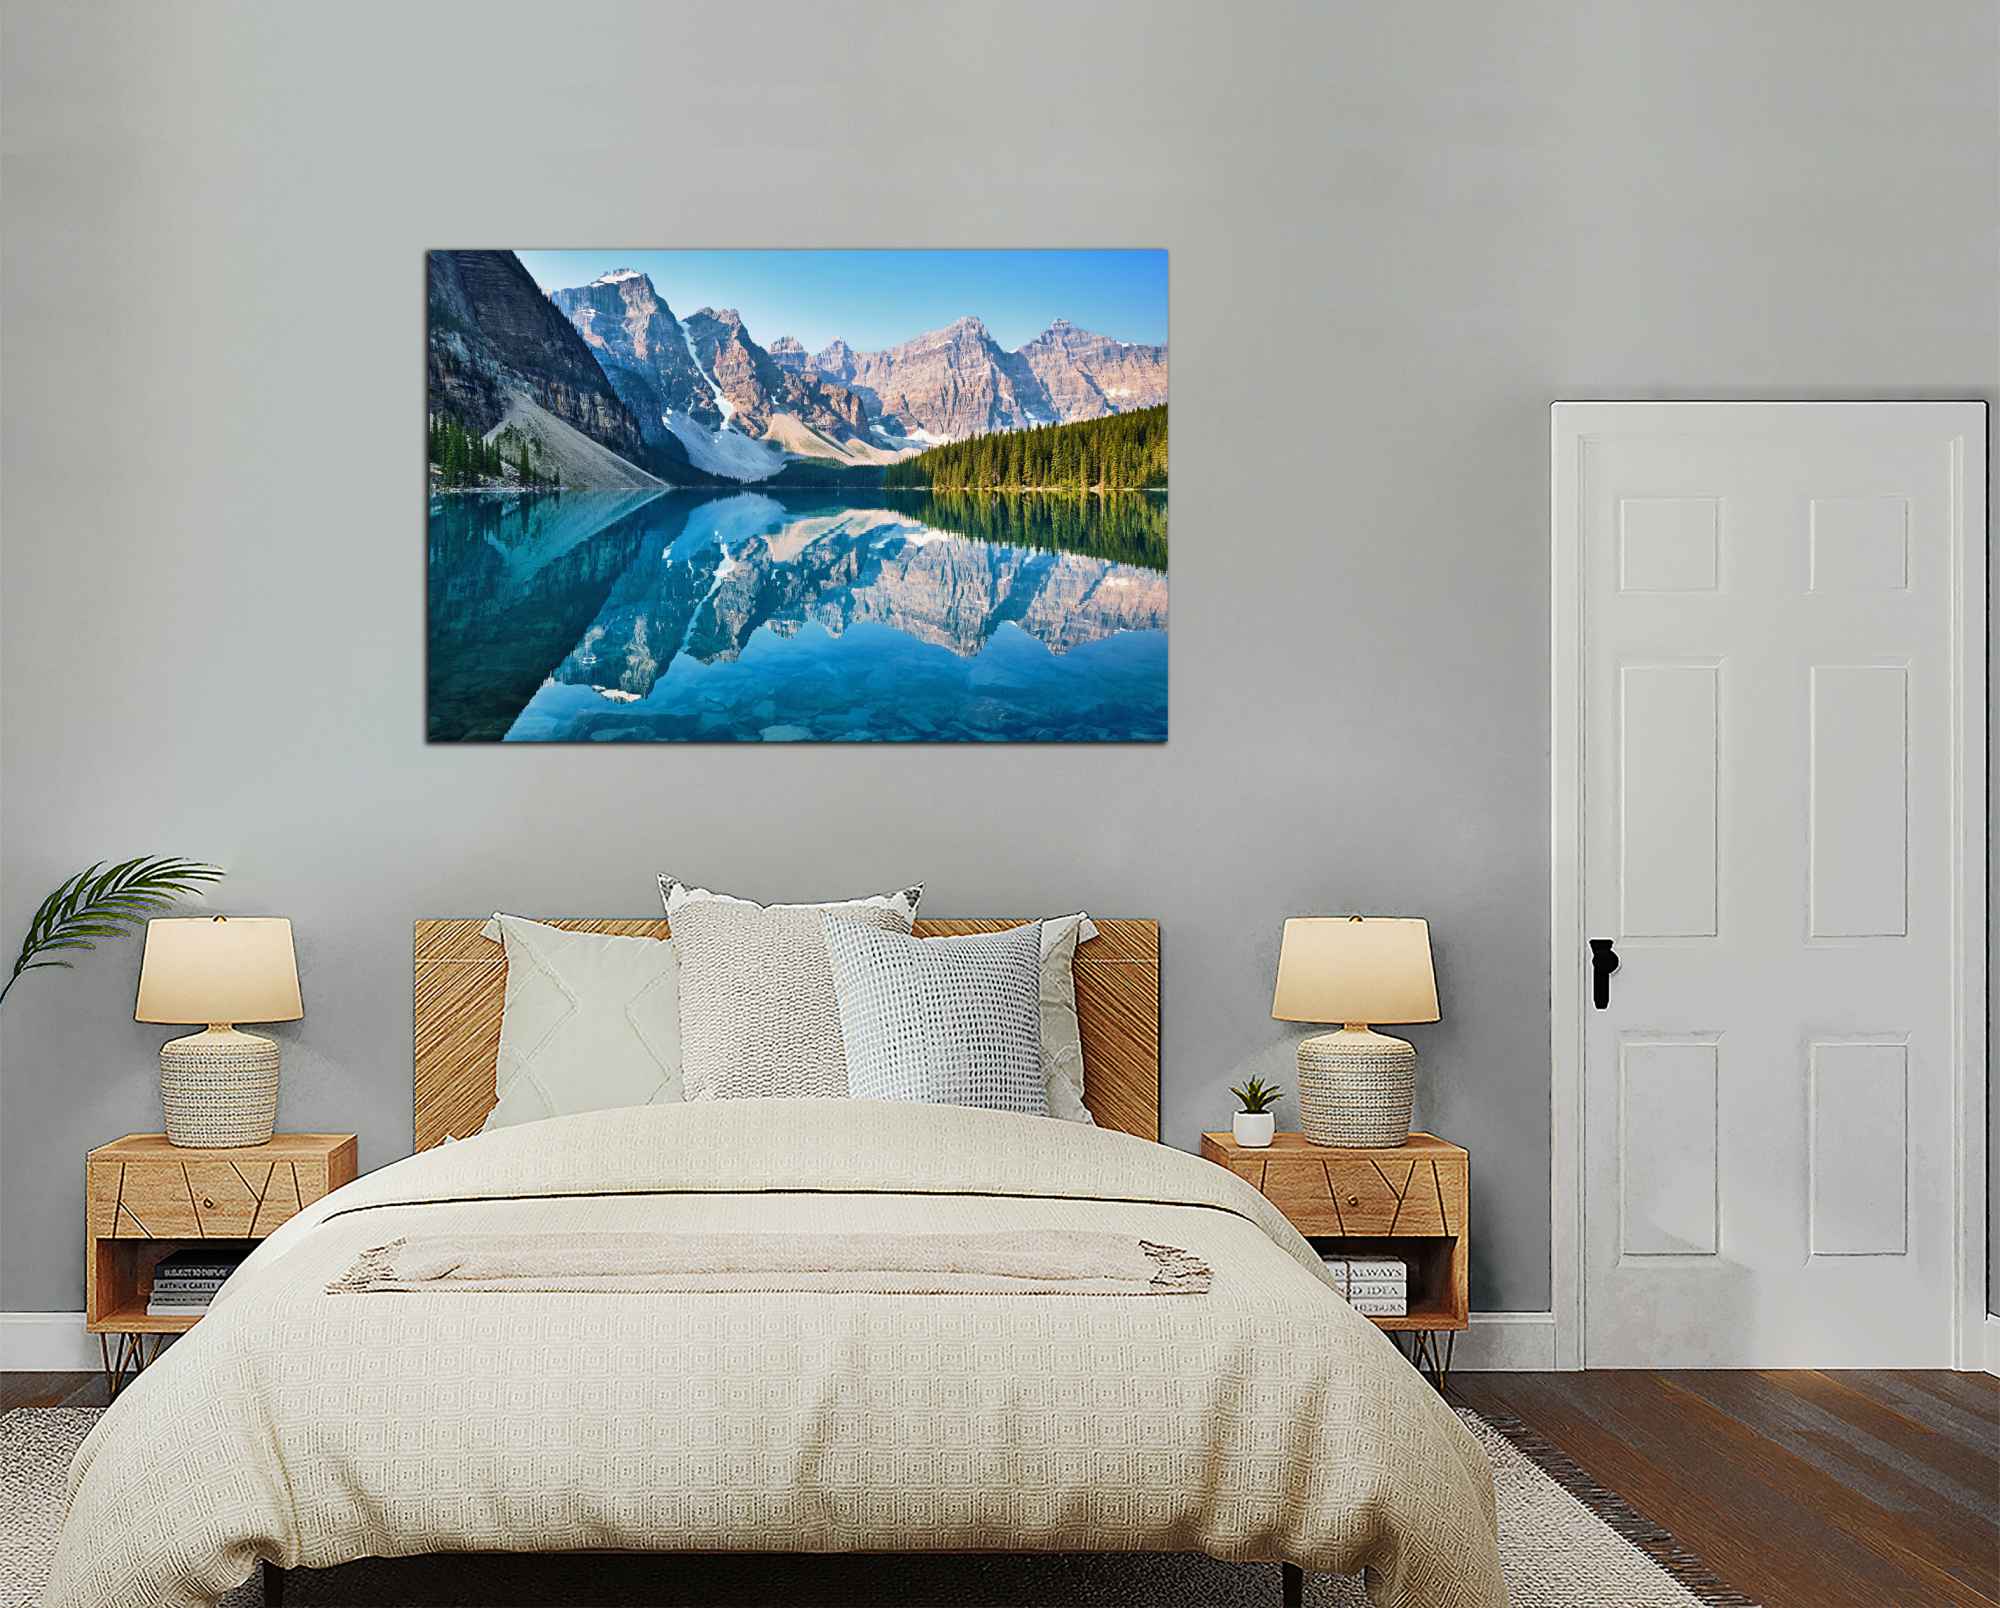 Obdĺžnikový obraz Hory a jezero